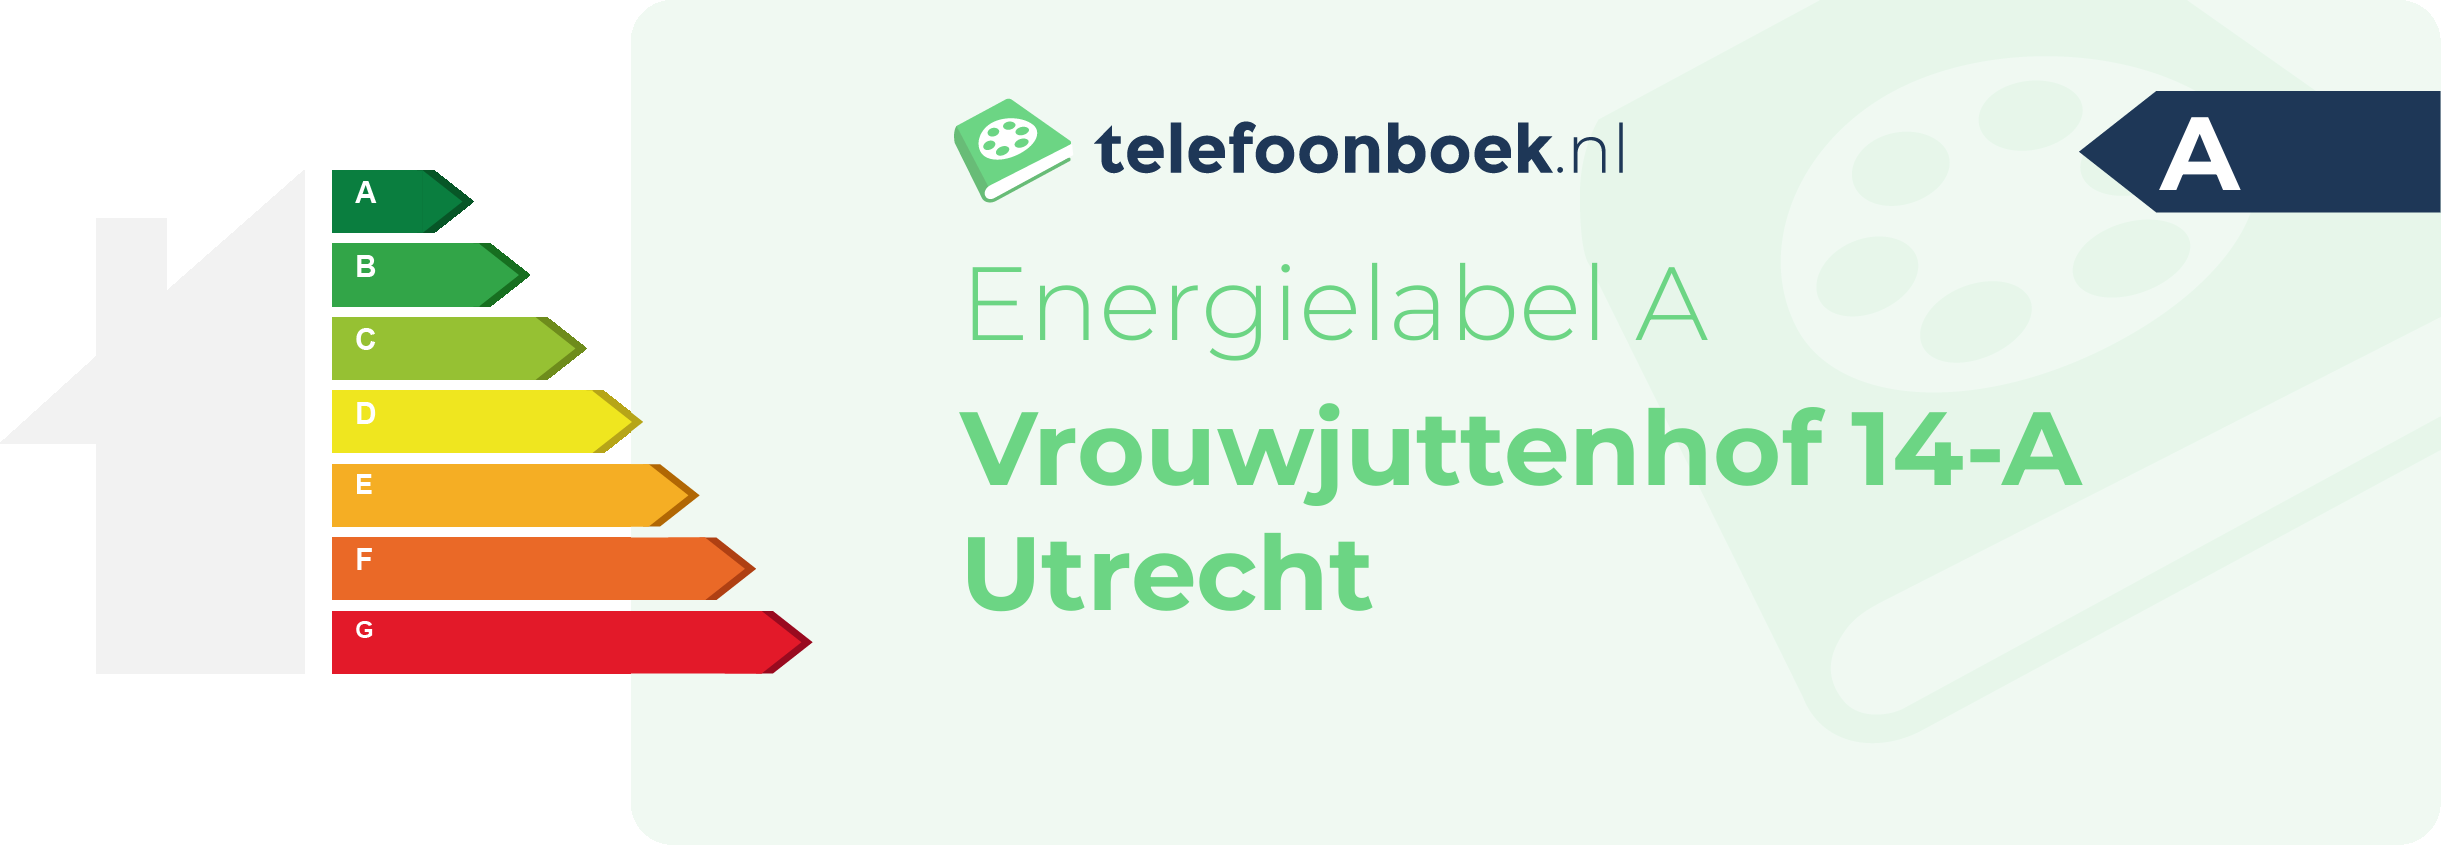 Energielabel Vrouwjuttenhof 14-A Utrecht